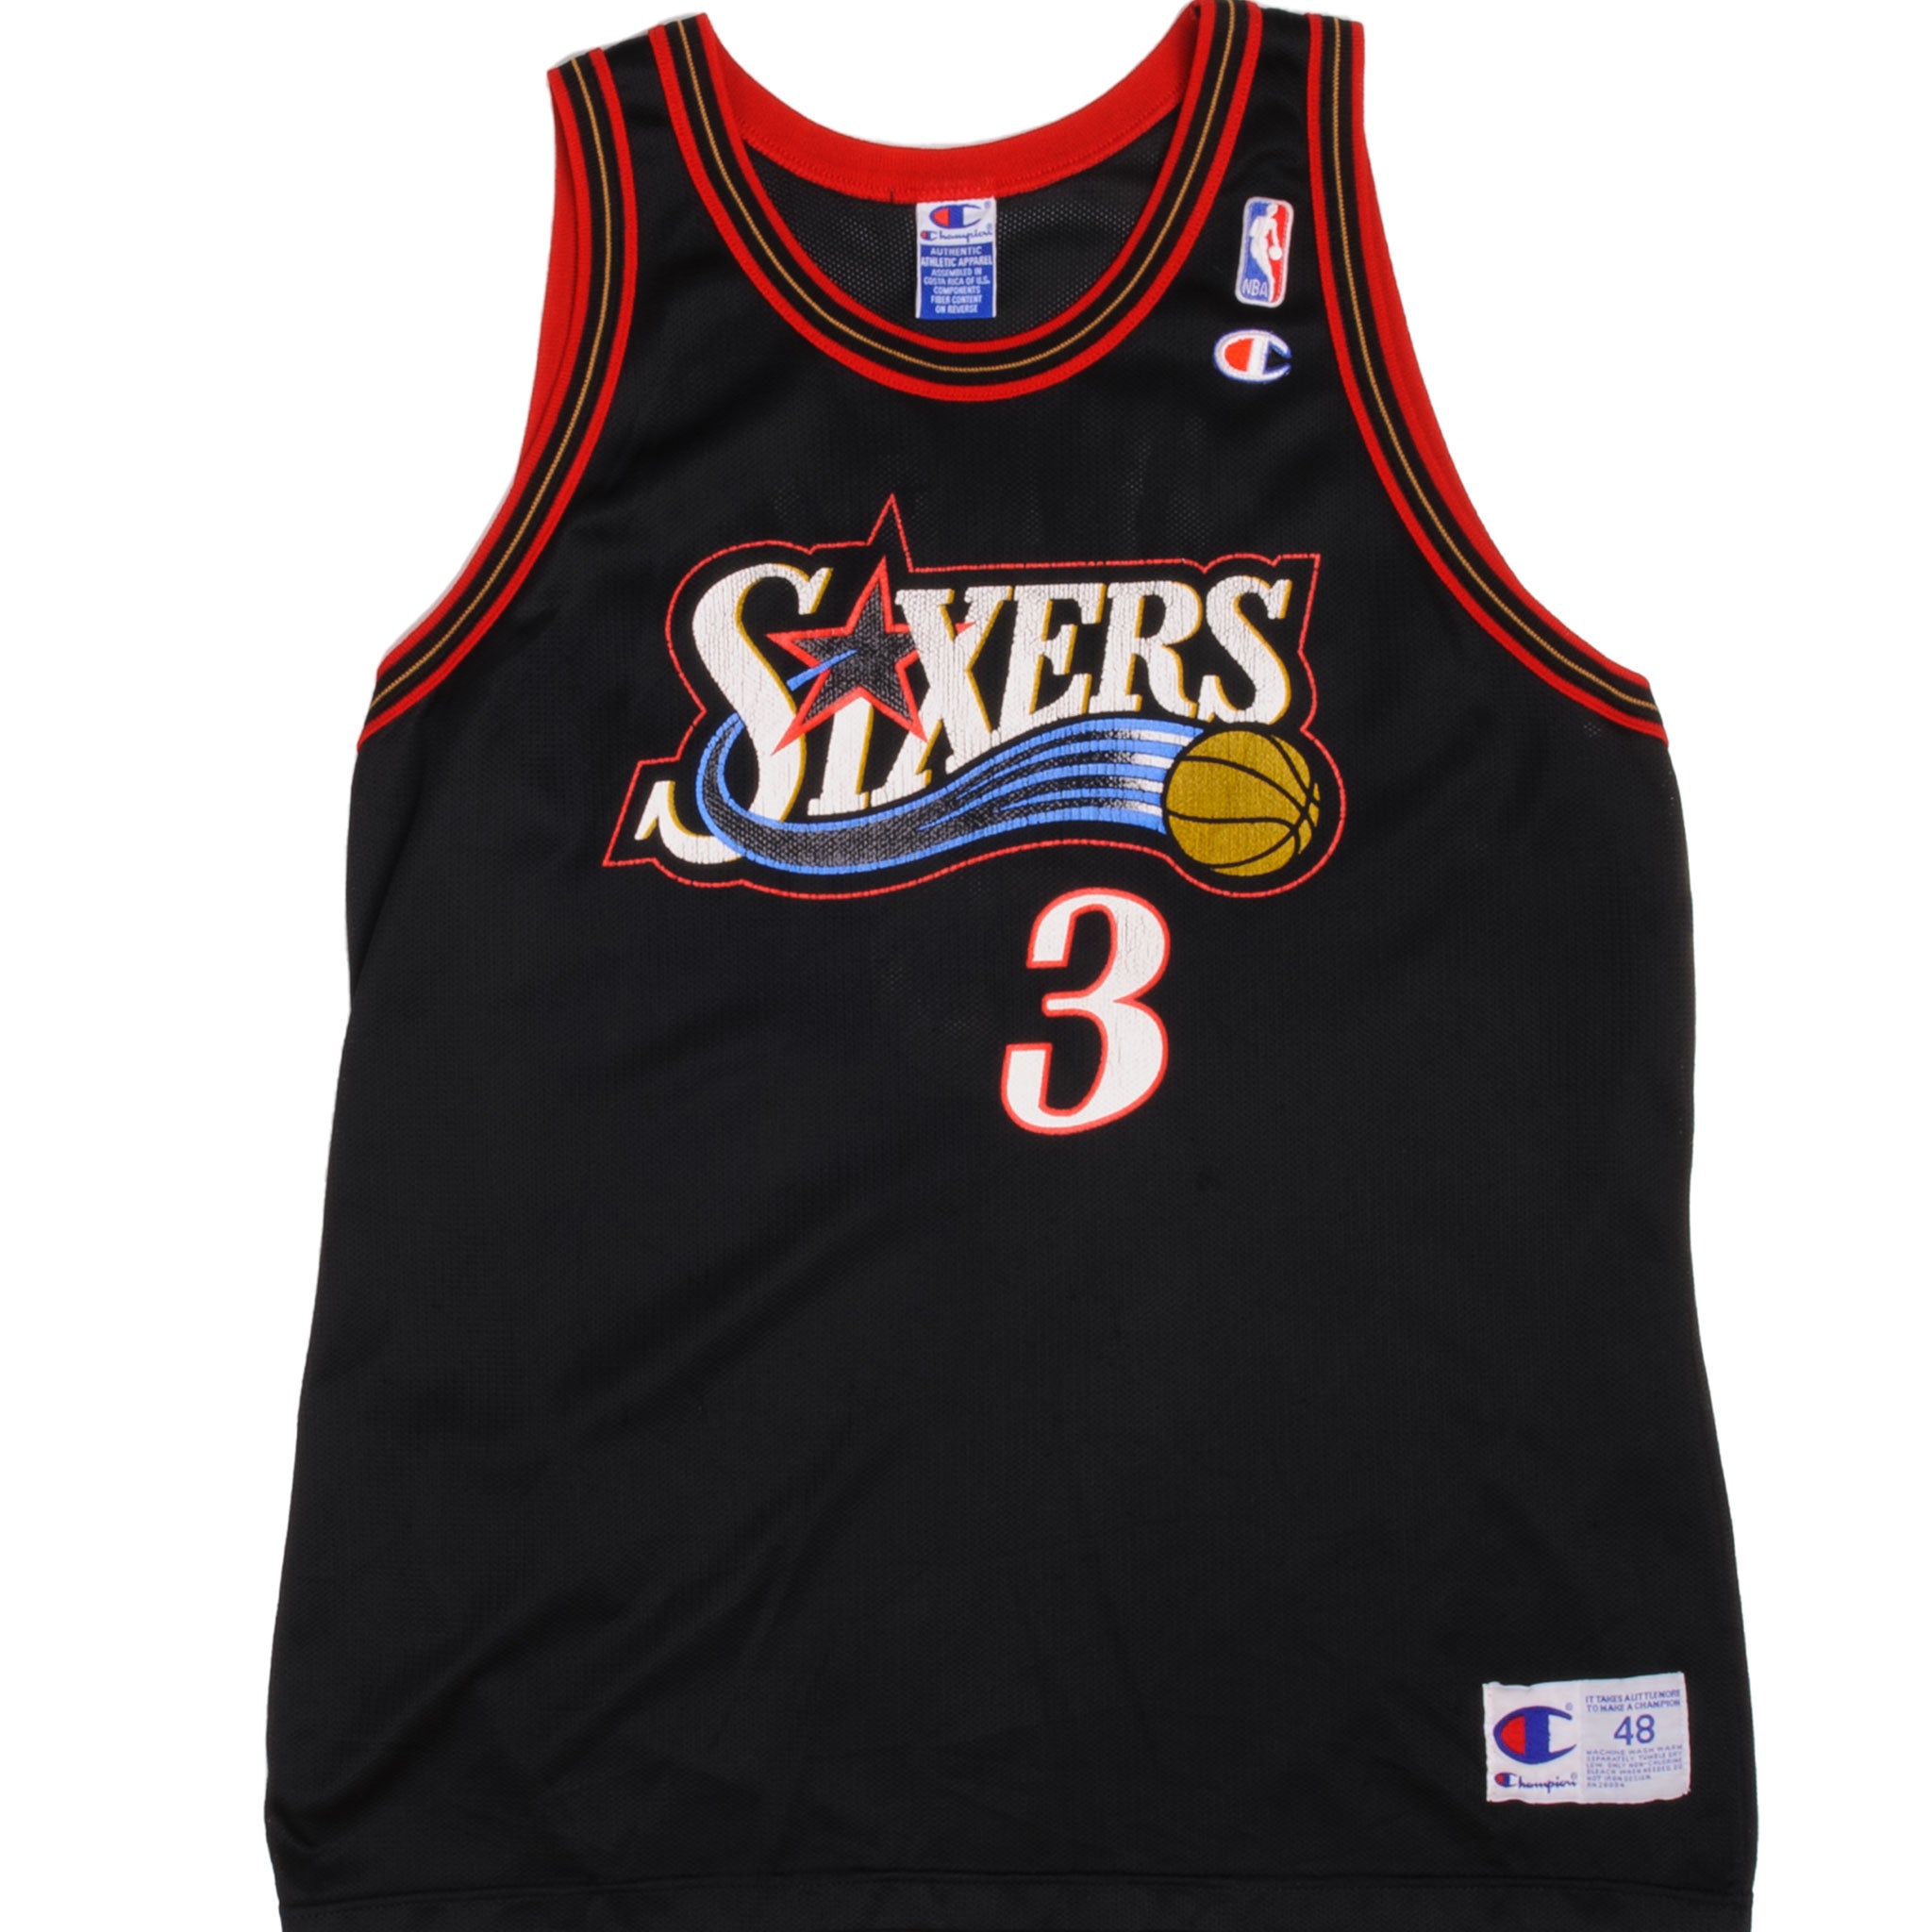 Vintage Champion NBA Los Angeles Lakers Kobe Bryant Jersey Size 48